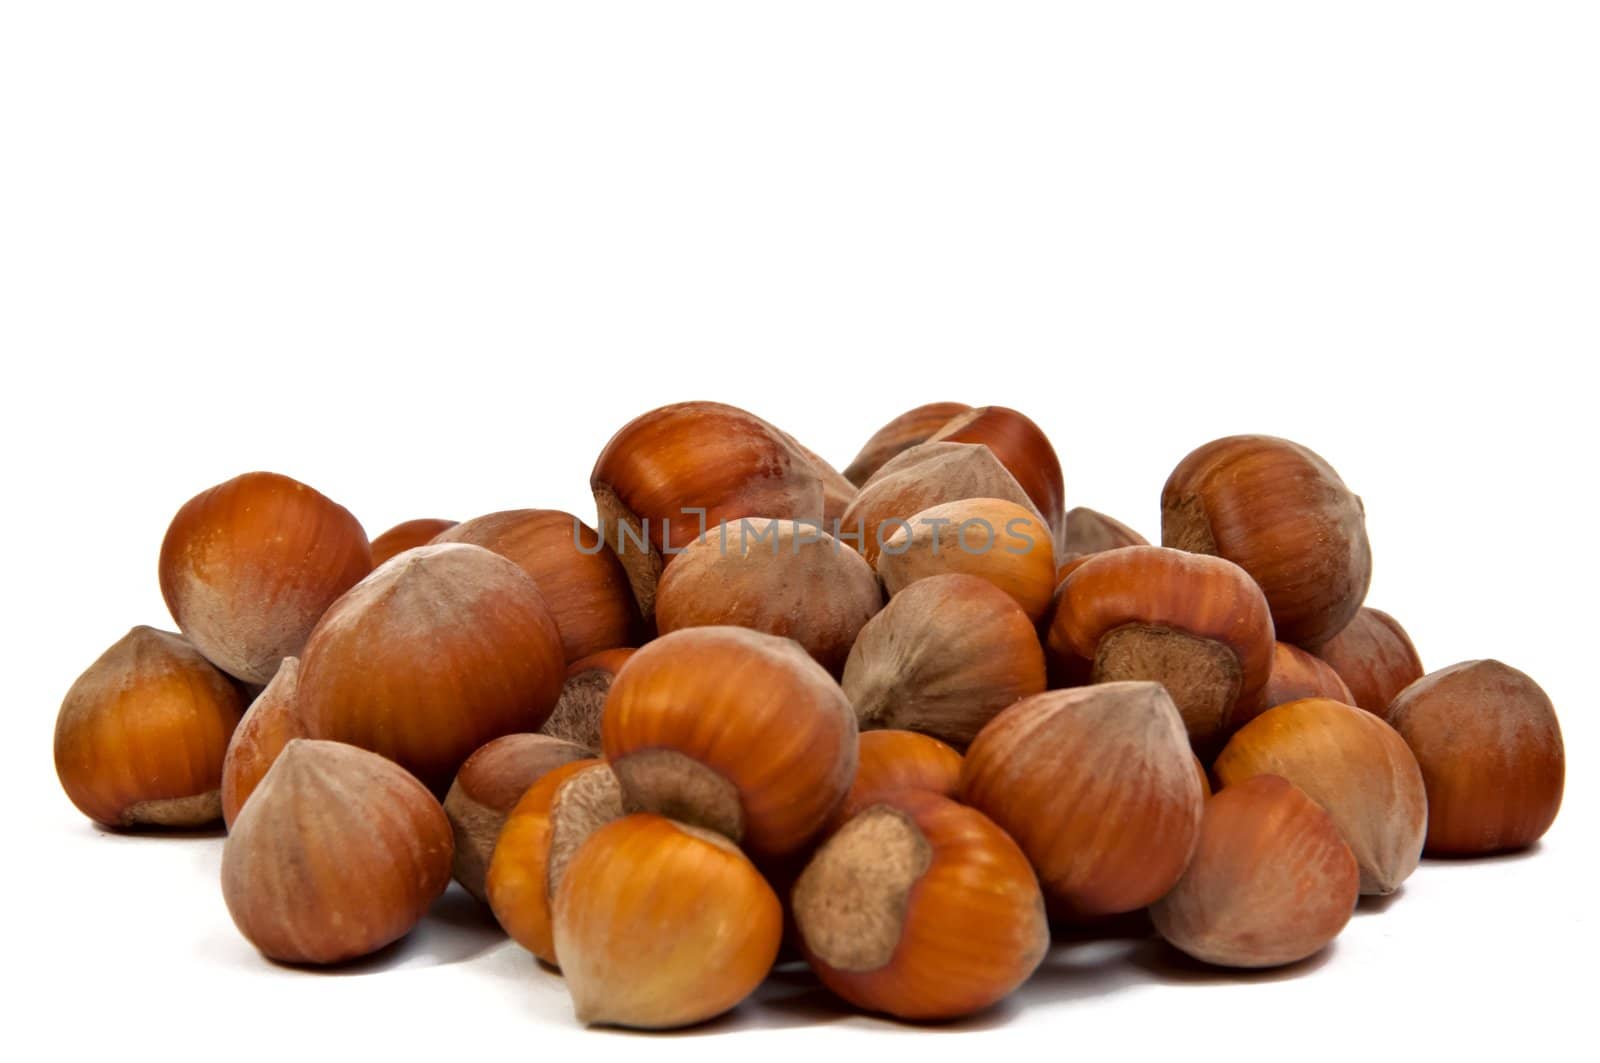 Handful of hazelnuts. by benjaminlion